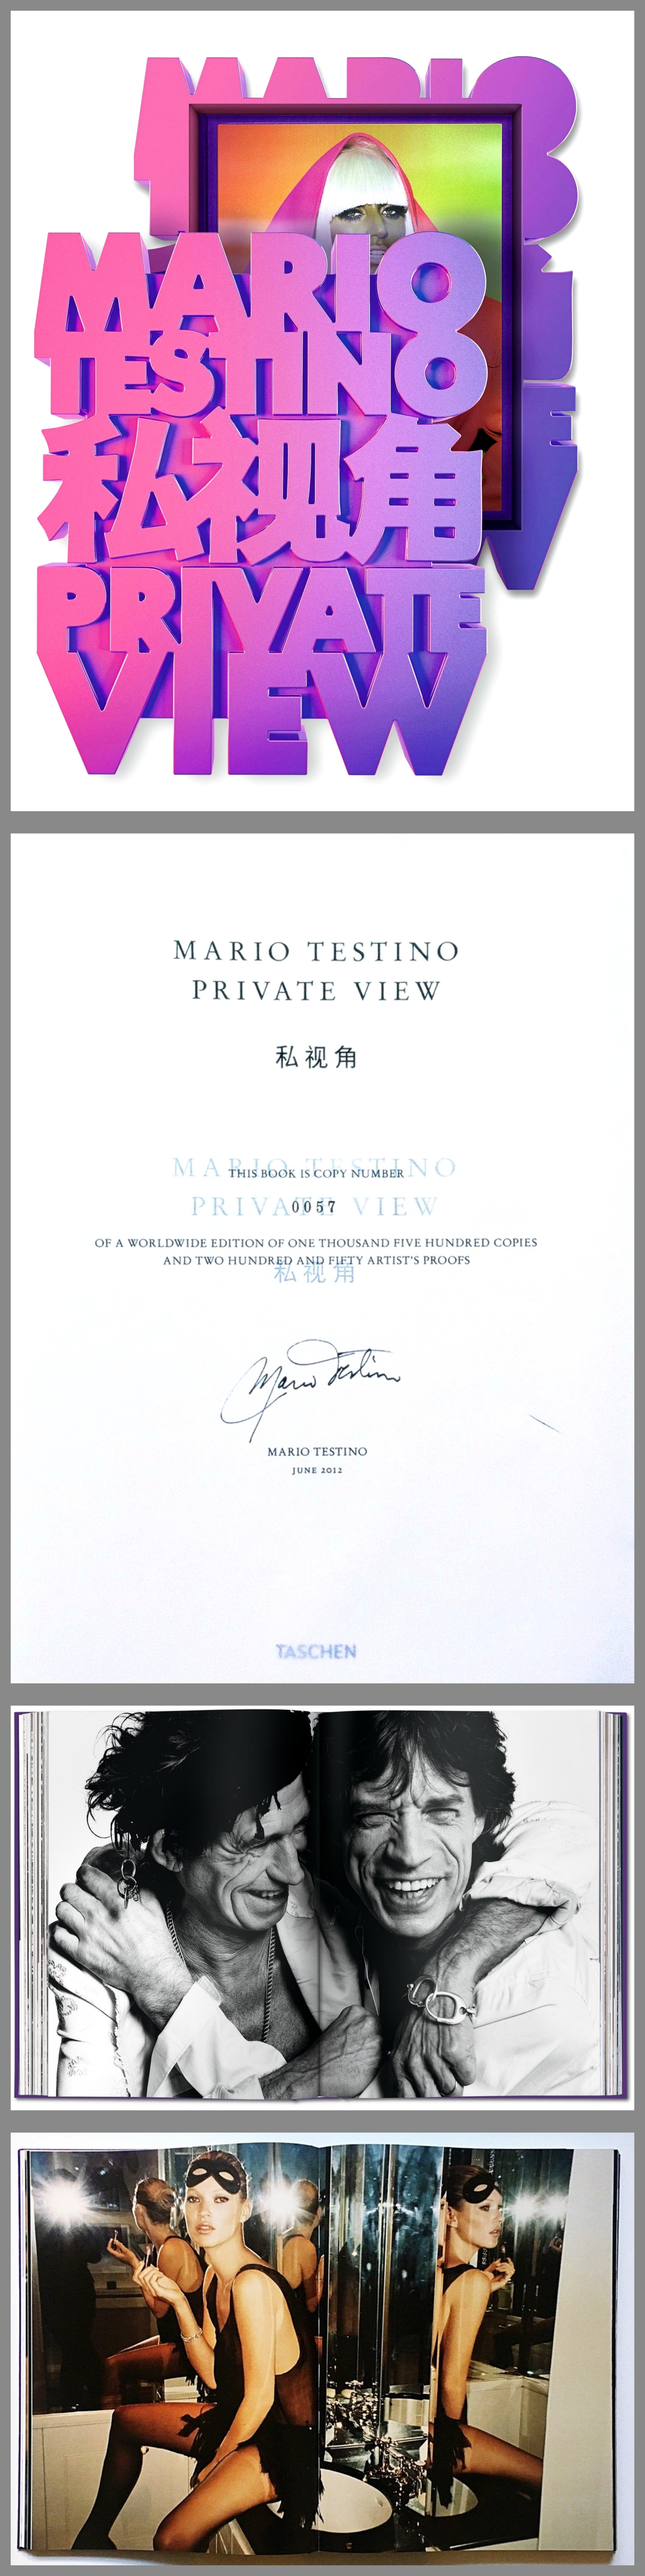 Lt Ed Handsigniertes Buch: Mario Testino Private View Bi-Lingual (Chinesisch-English) im Angebot 17